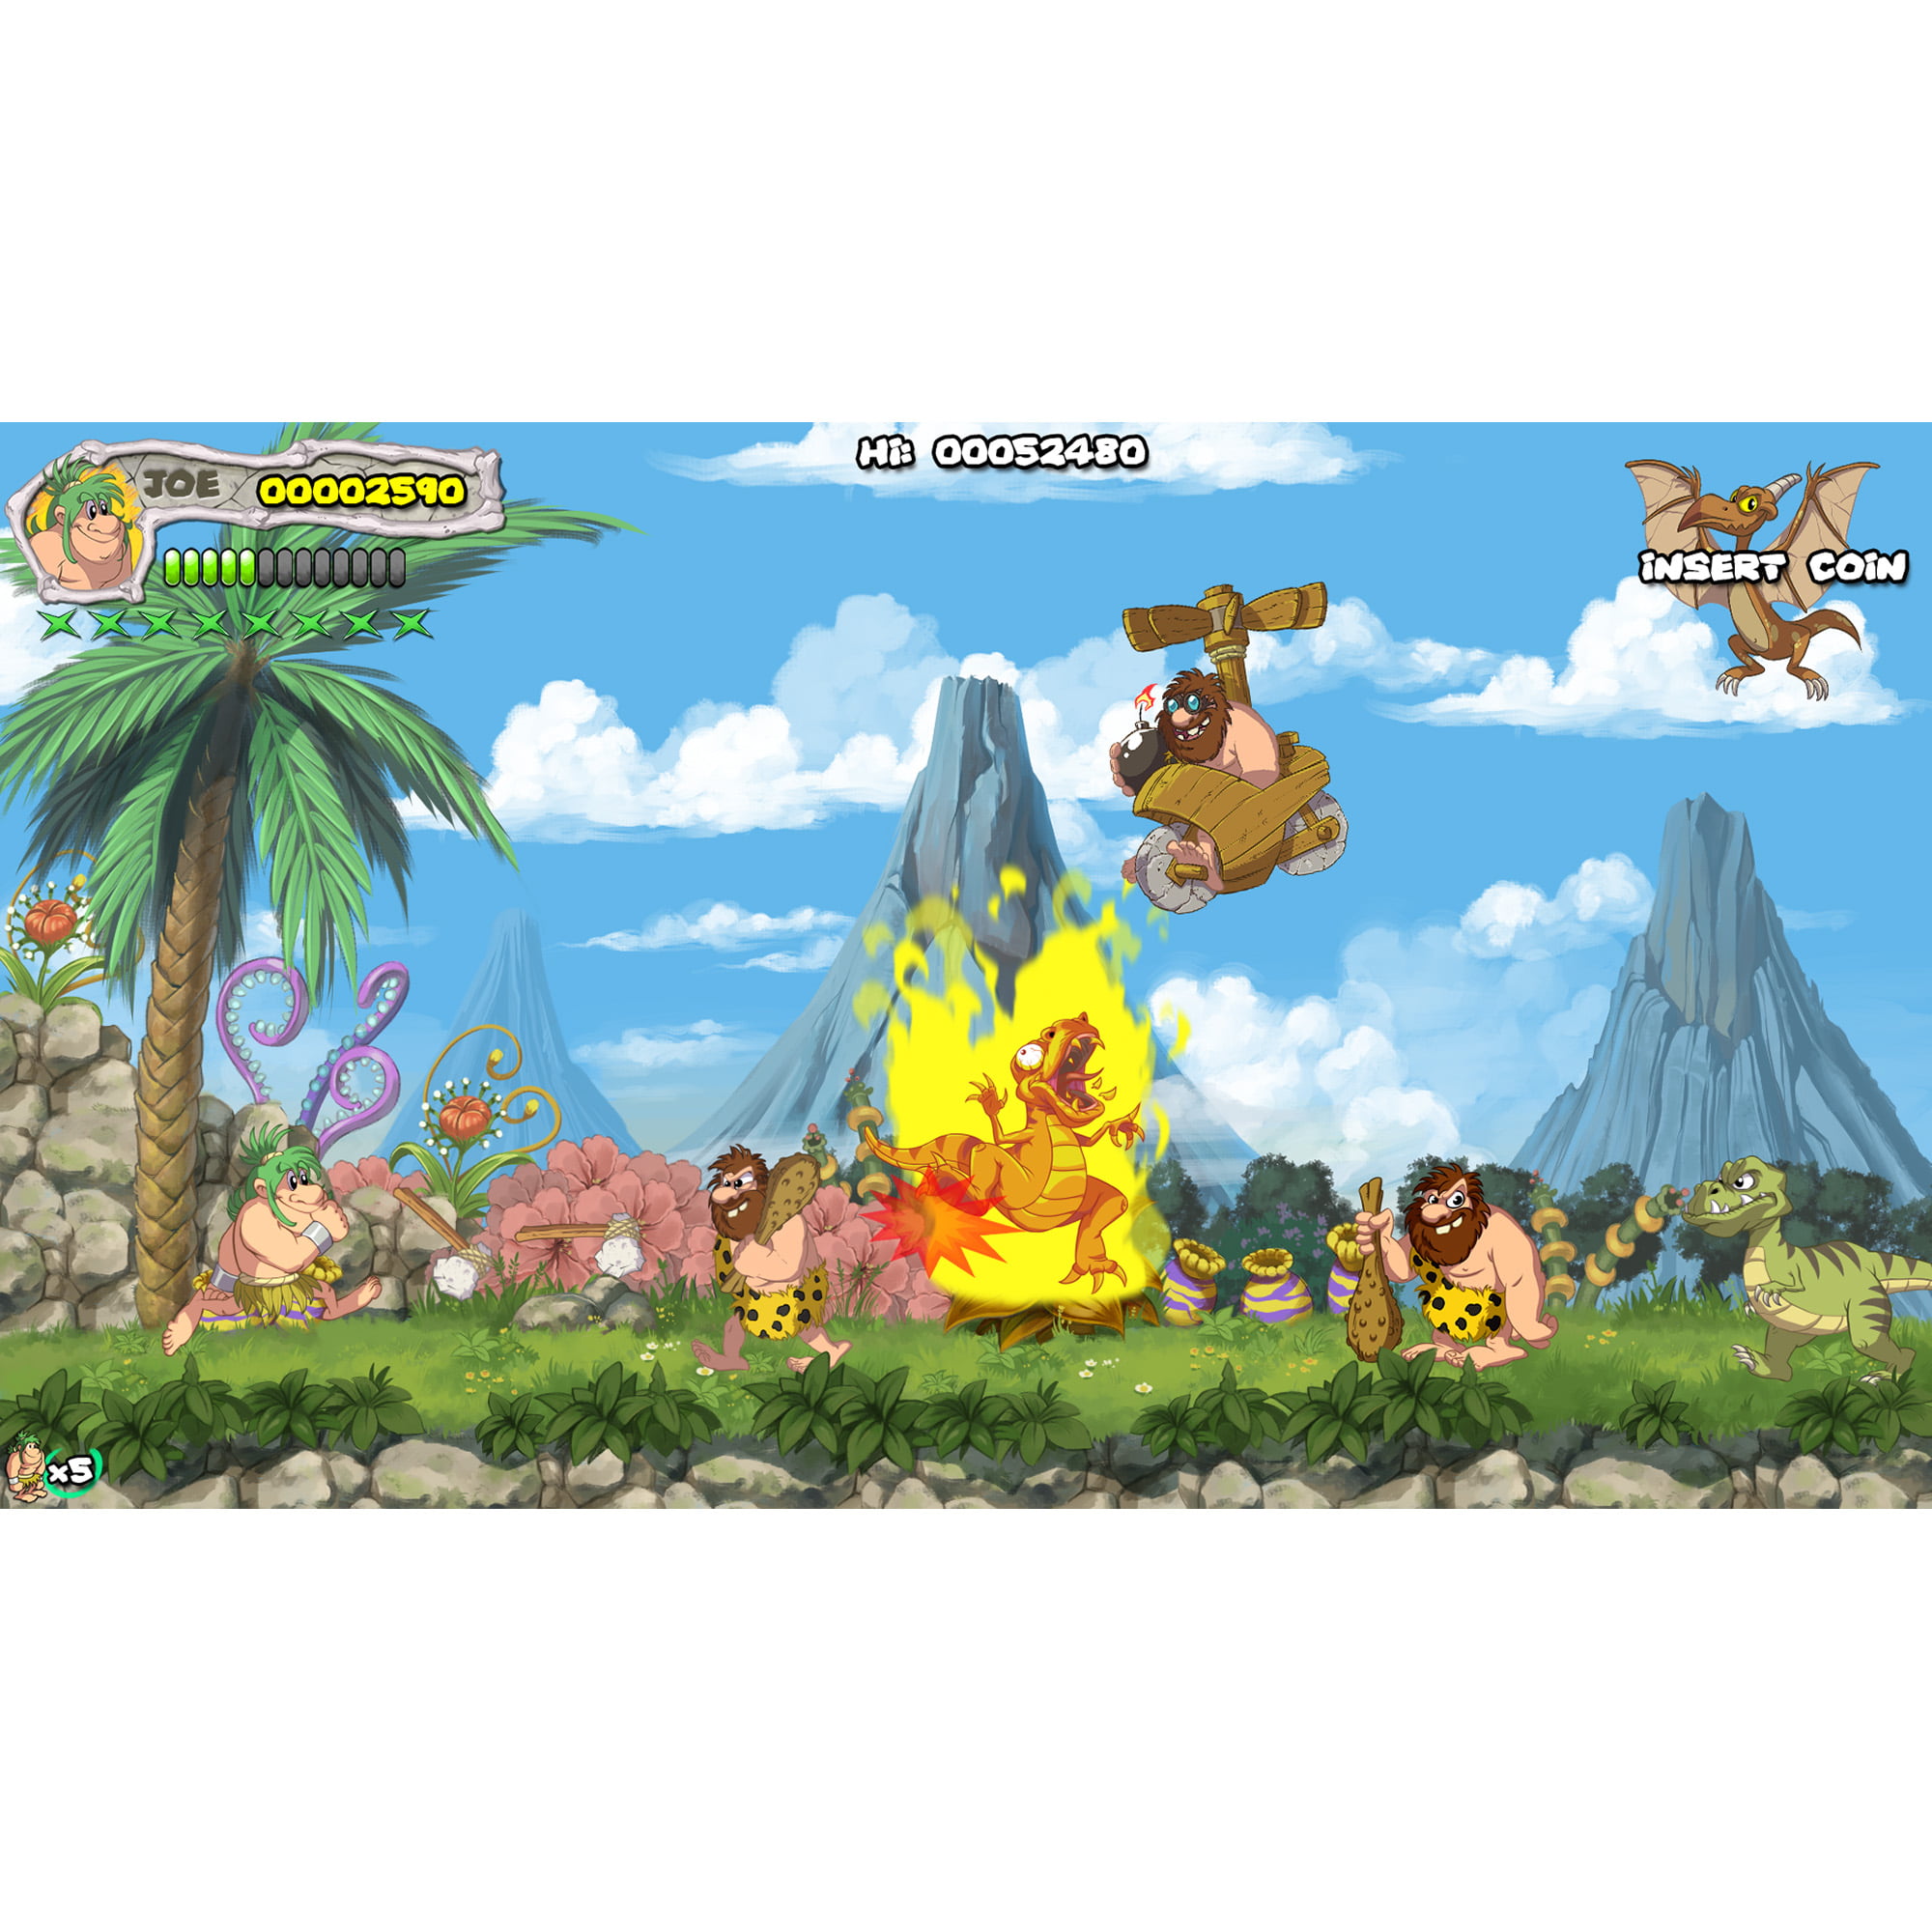 New Joe & Mac: Caveman Ninja T-Rex Edition Nintendo Switch - Cadê Meu Jogo